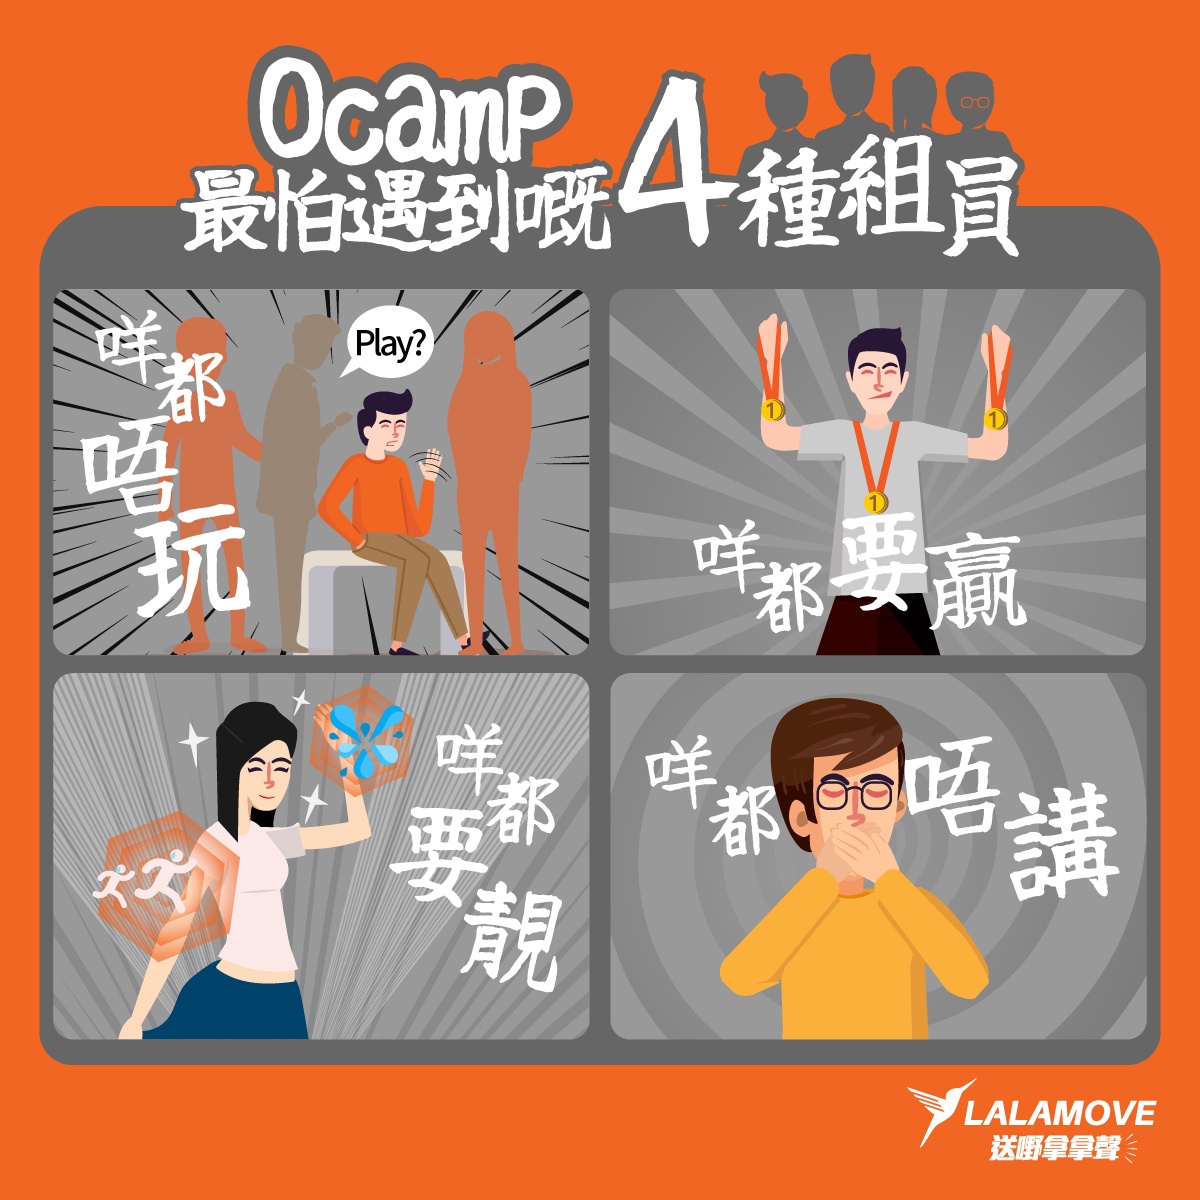 HK_OcampPeople_2018-01